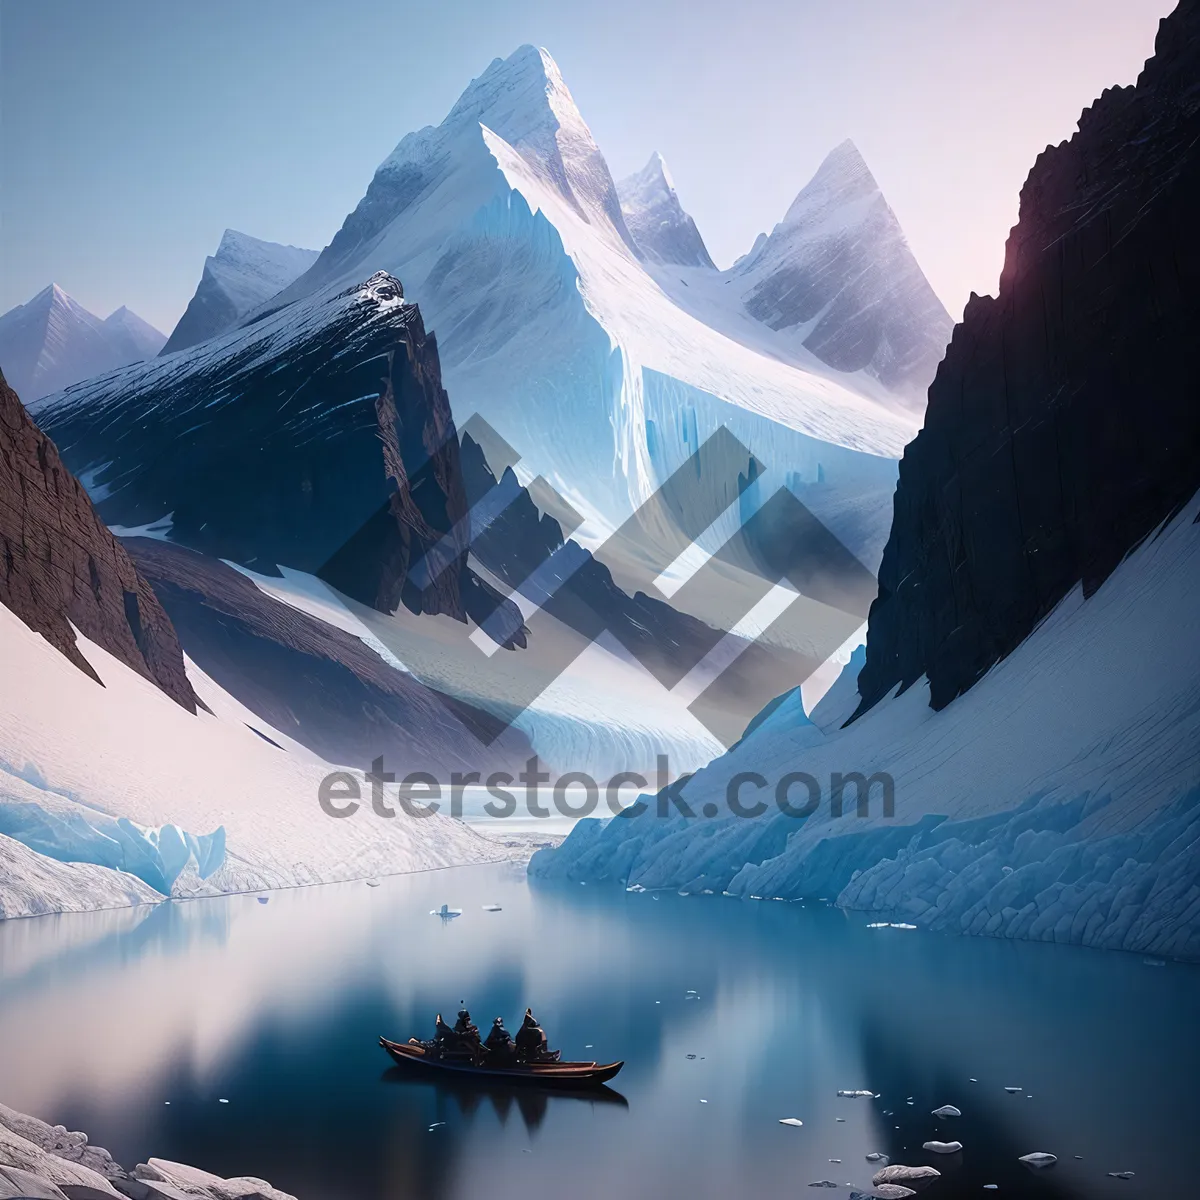 Picture of Majestic Winter Wonderland: Alpine Glacier and Mountain Peaks